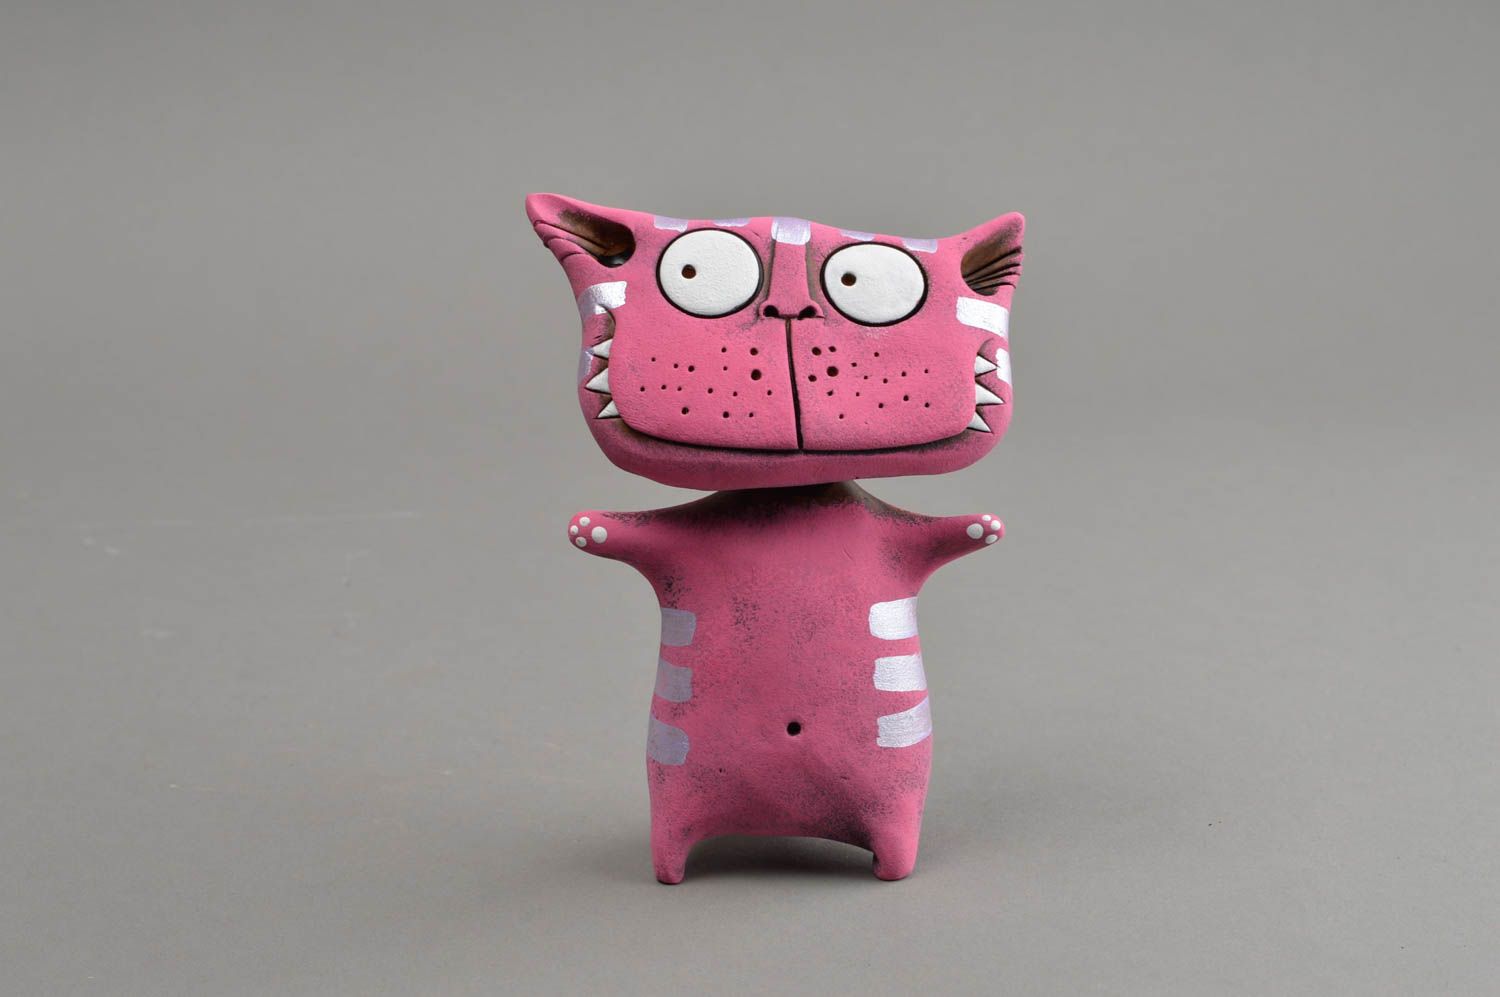 Keramische Statuette Katze handmade Souvenir interessant bemalt einzigartig toll foto 2